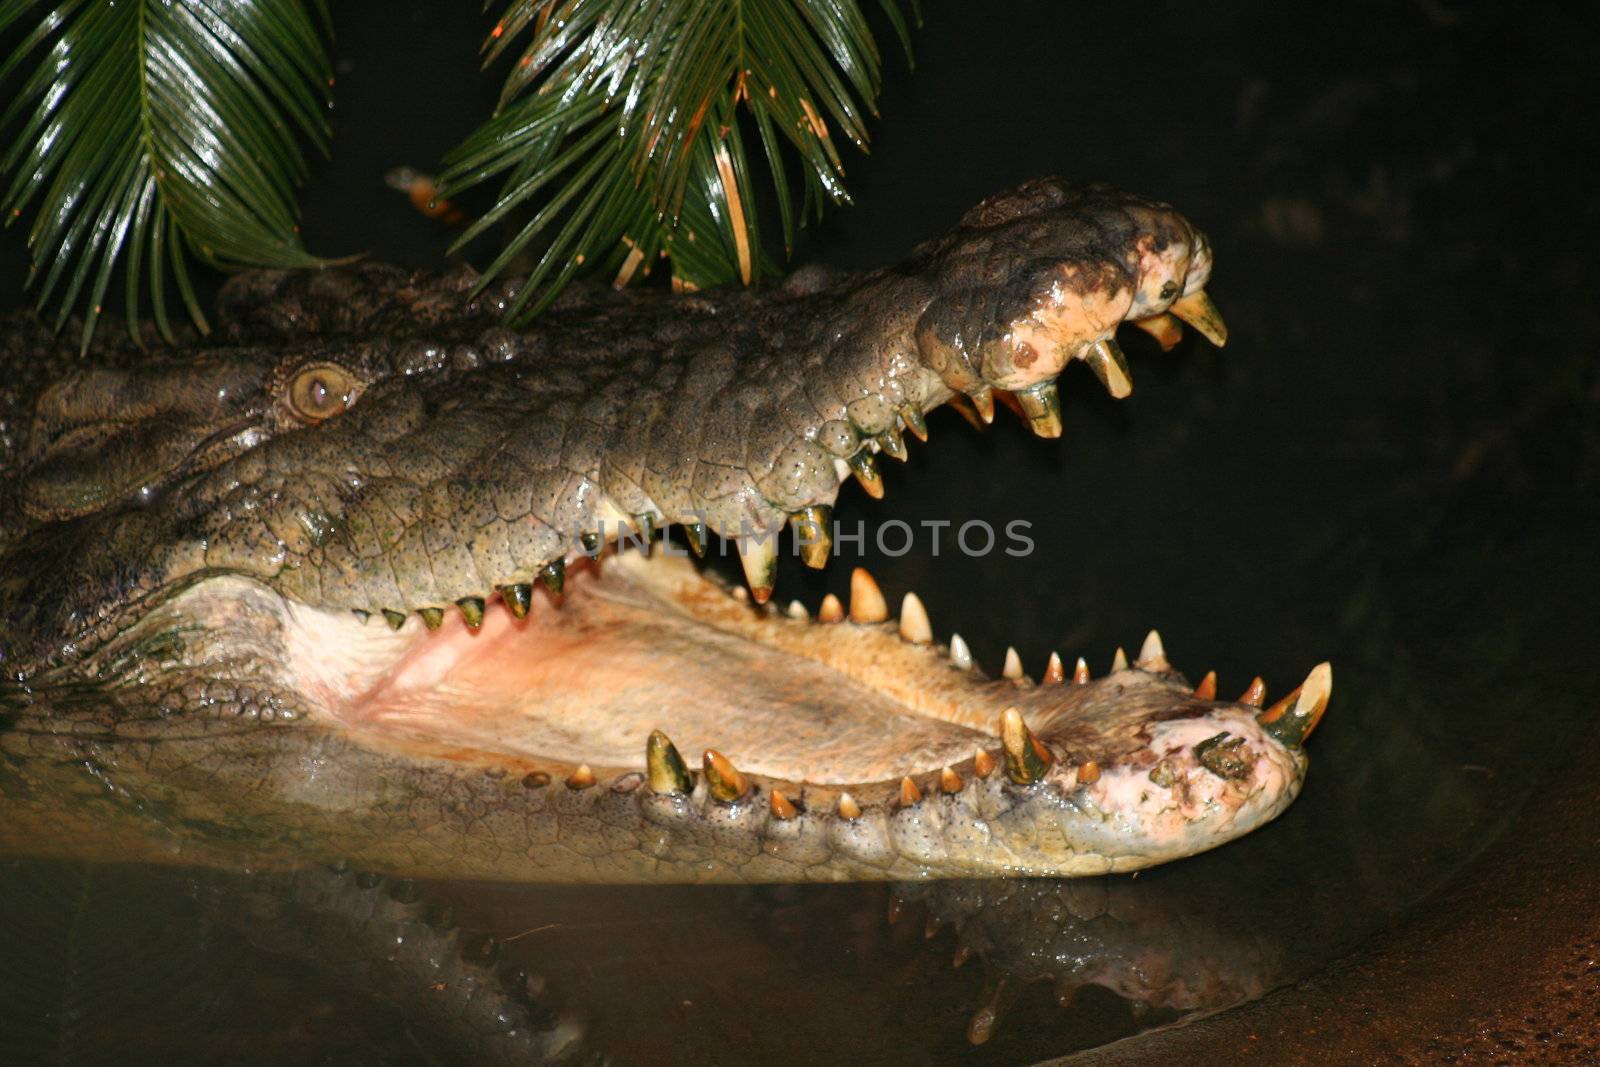 Saltwater Crocodile by ThomasR